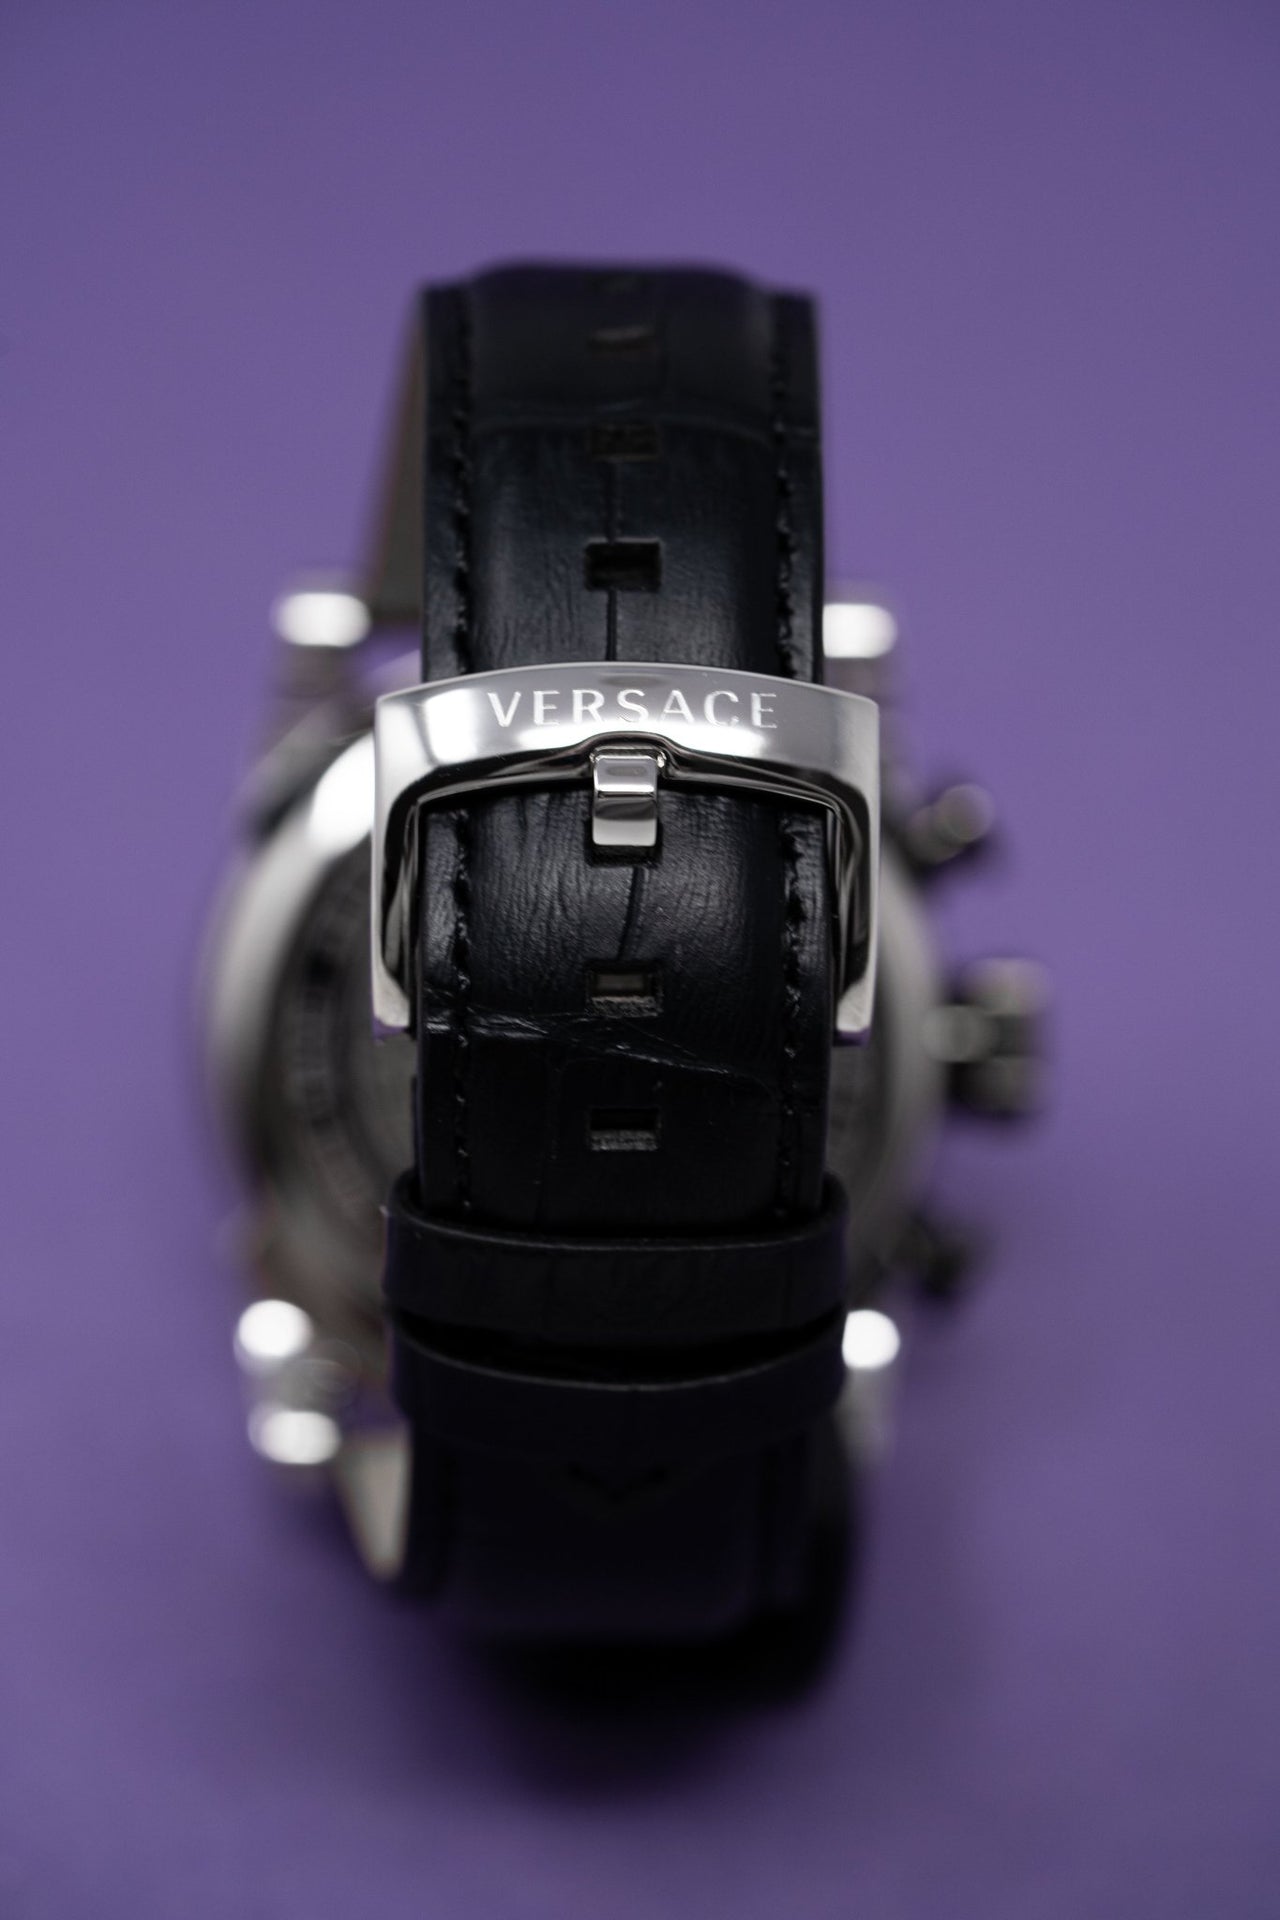 Versace Urban Chronograph Black - Watches & Crystals